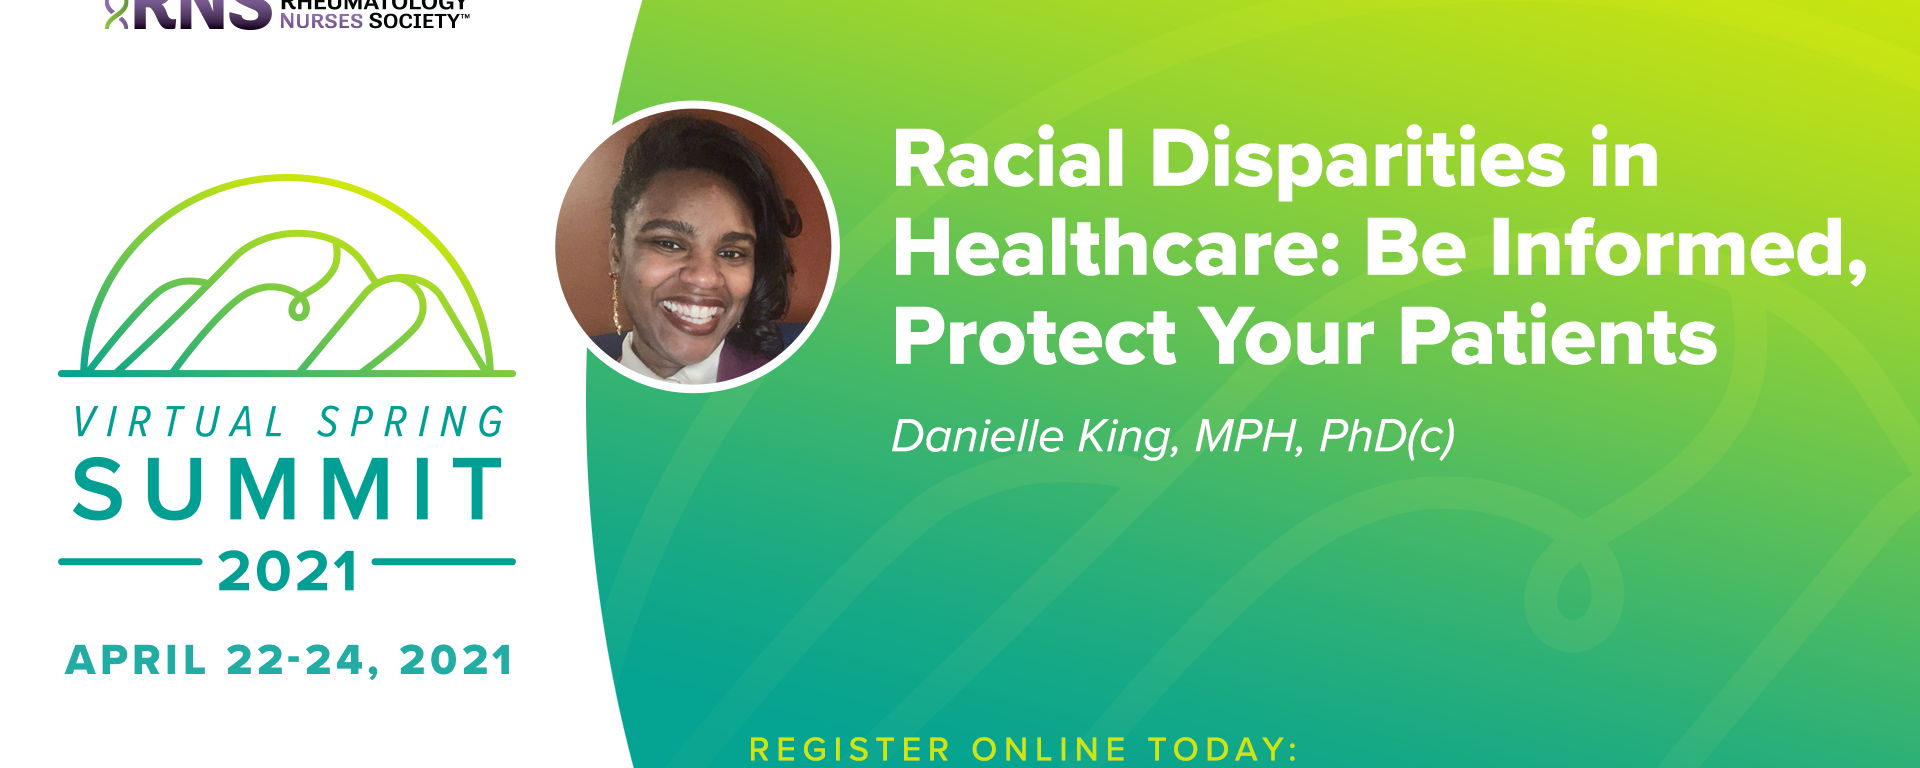 Racial Disparities in Healthcare: Be Informed, Protect Your Patients